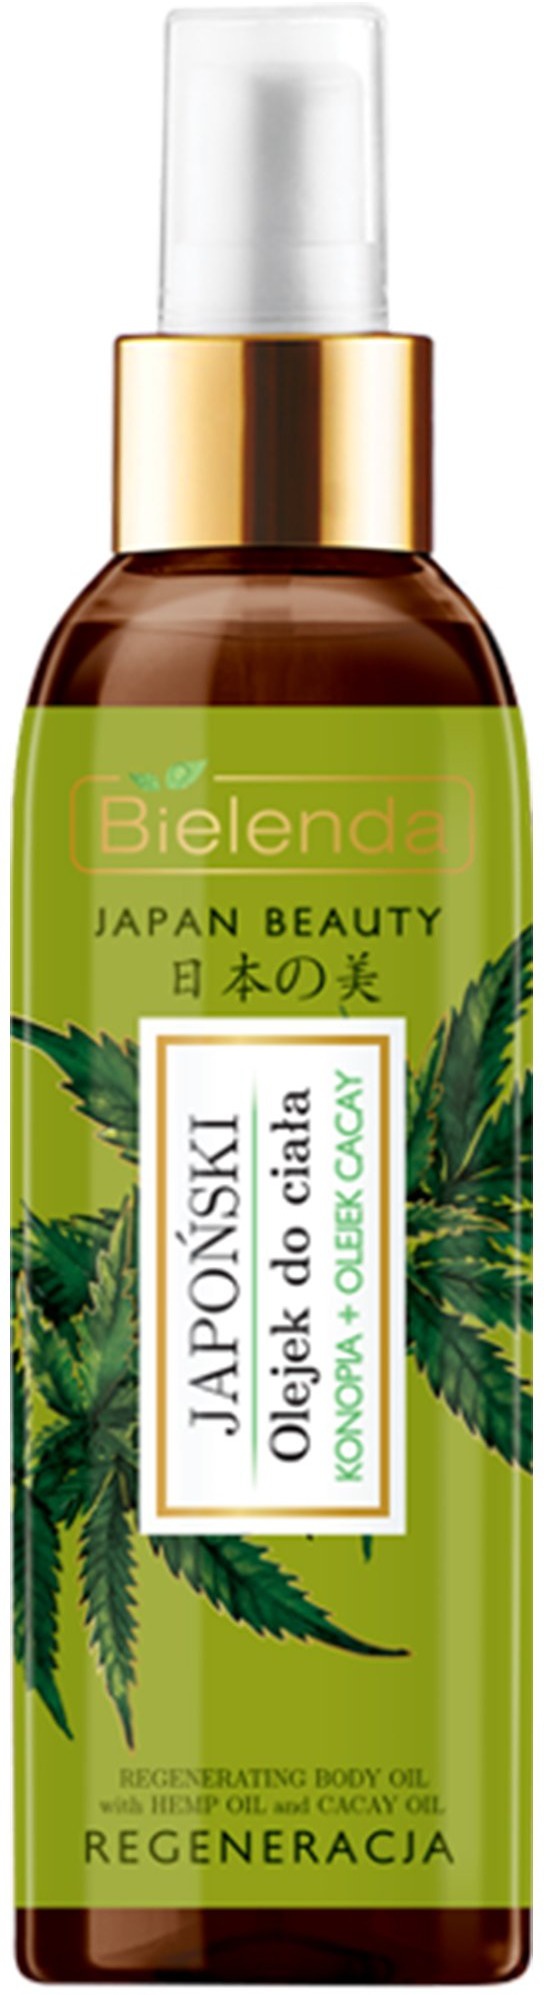 Bielenda JAPAN BEAUTY Body Oil Hemp & Cacay Oil